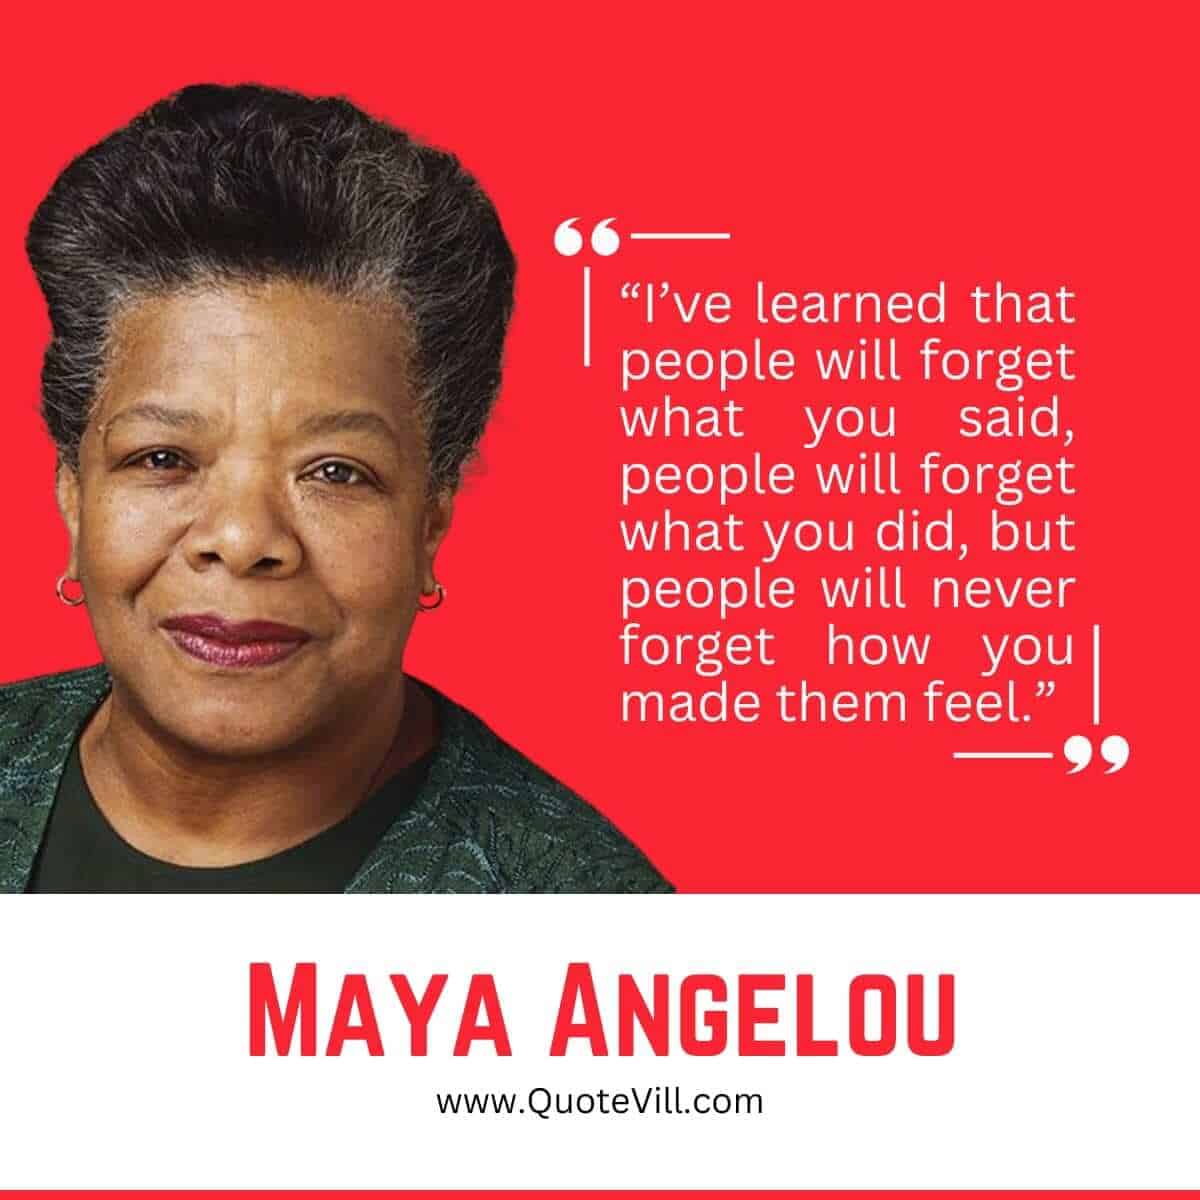 40 Best Maya Angelou Quotes That Make You Wonder